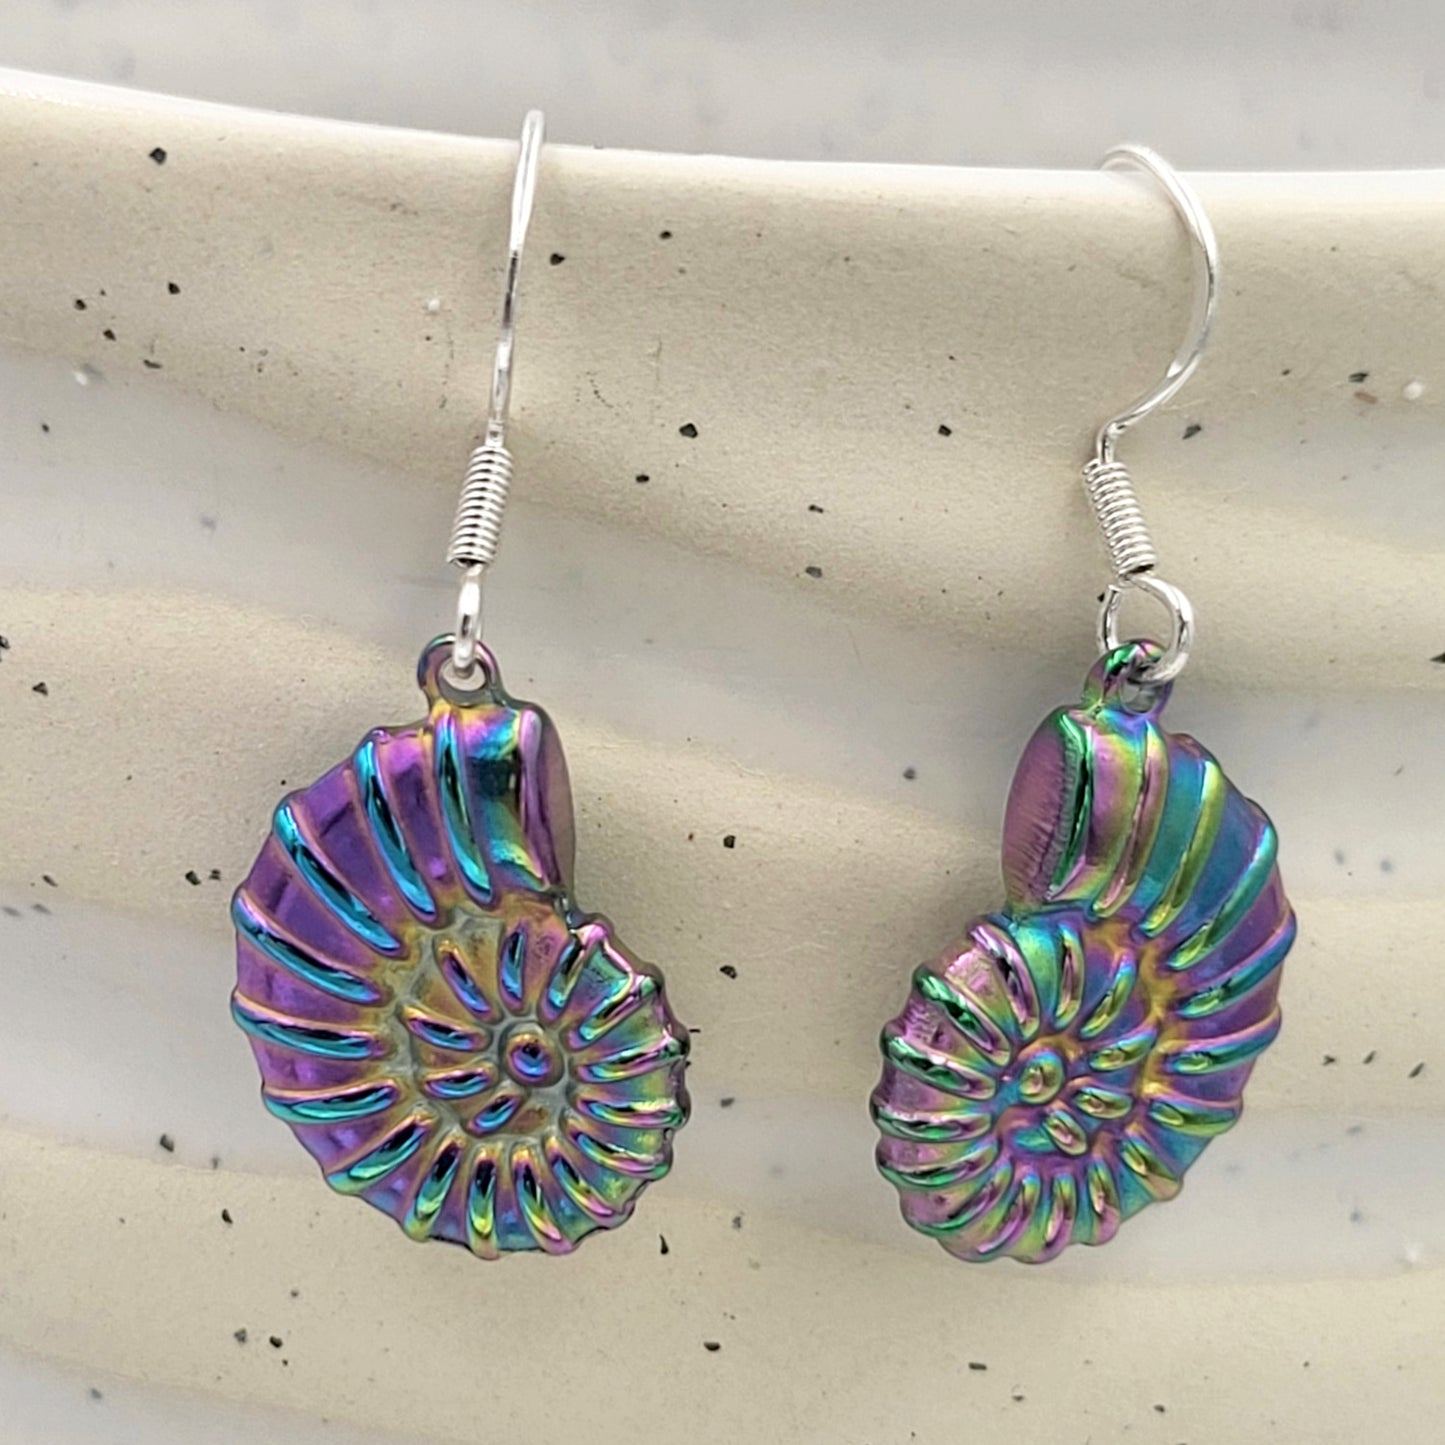 BESHEEK Iridescent Rainbow Spiral Nautilus Dangle Earrings | Hypoallergenic Boho Beach Gala Wedding Style Fashion Earrings